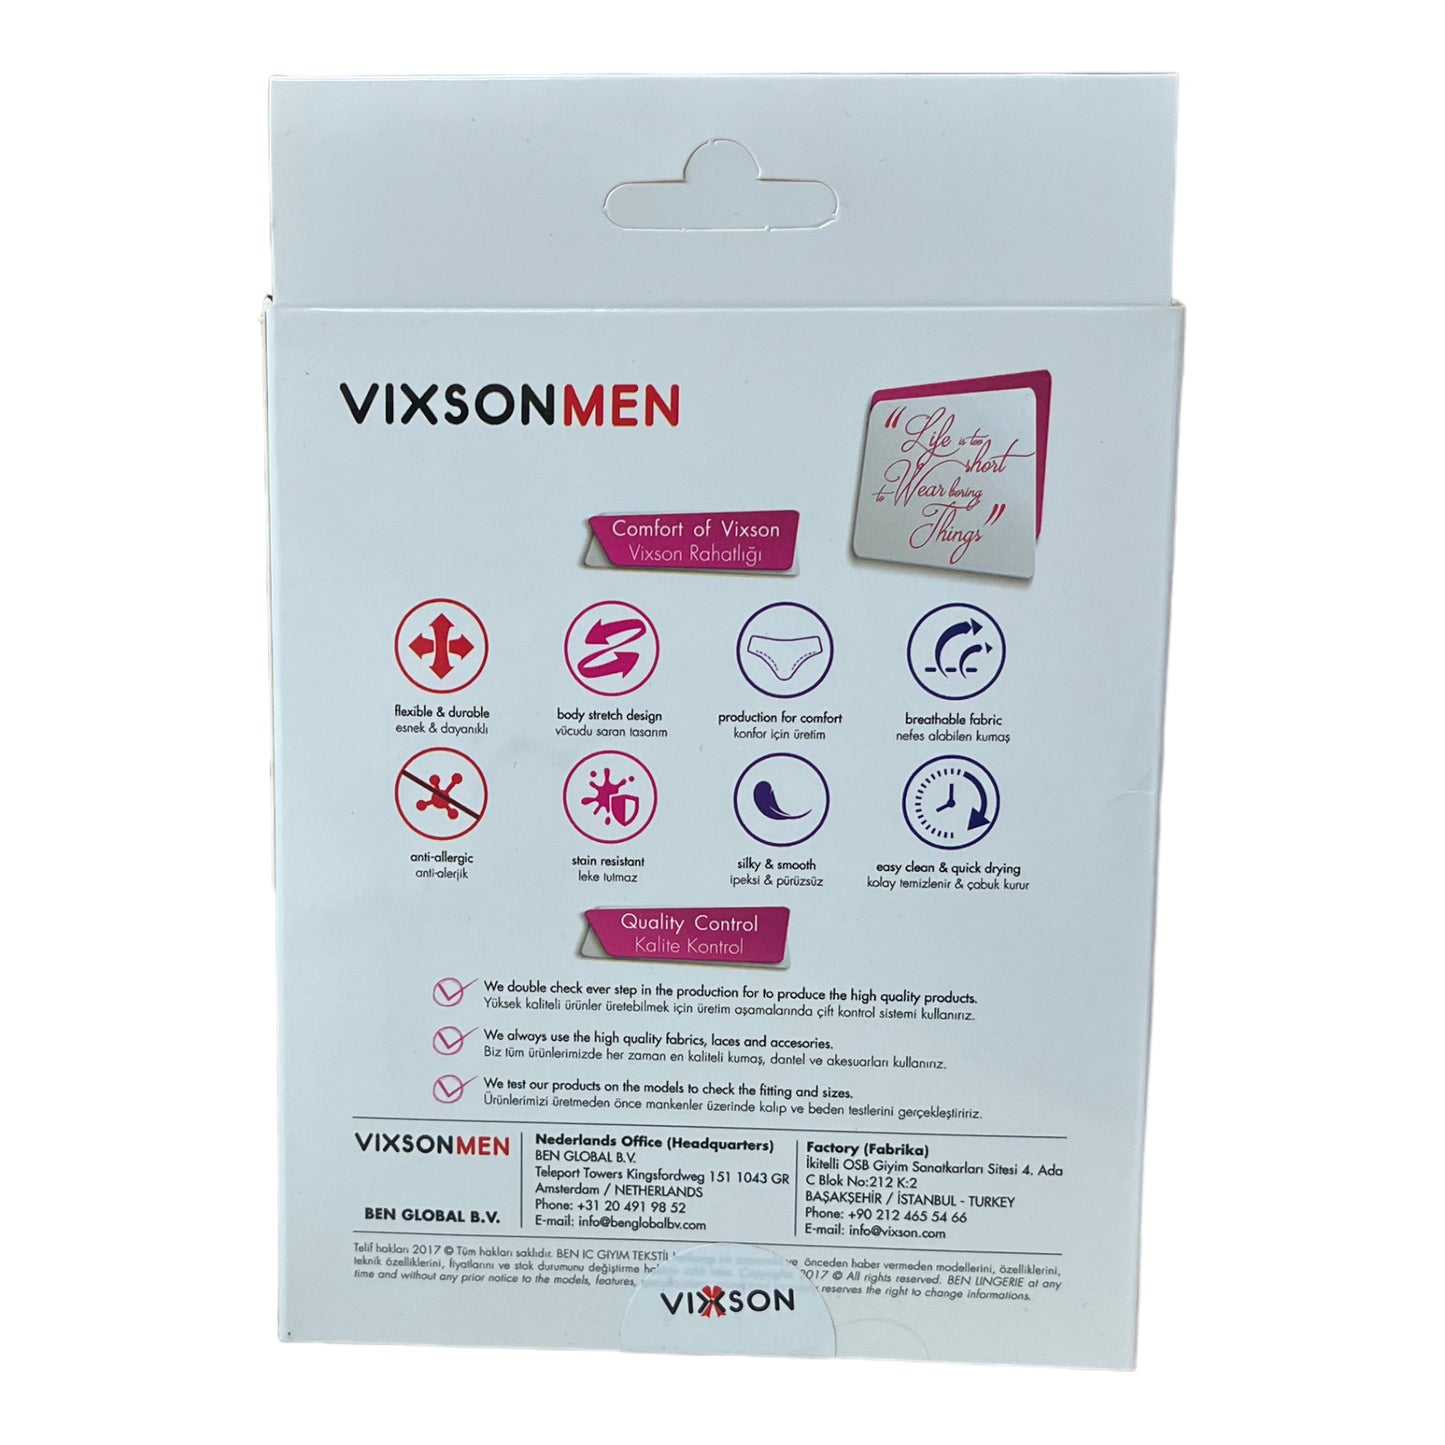 Vixson - VN-5015 - Male Lingerie - One Size S-XL - Black